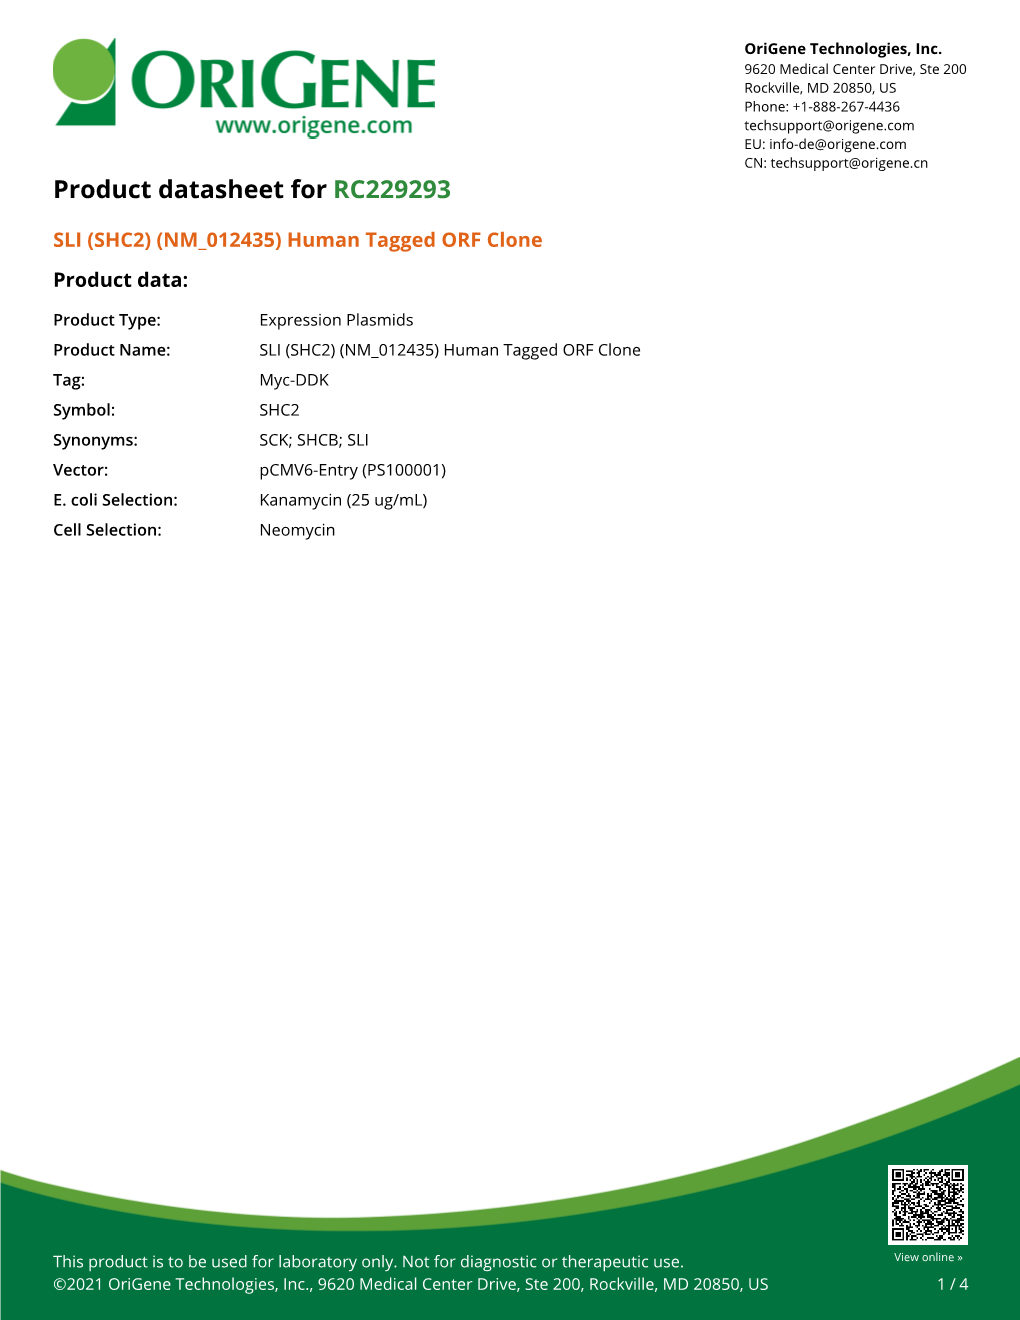 (SHC2) (NM 012435) Human Tagged ORF Clone Product Data